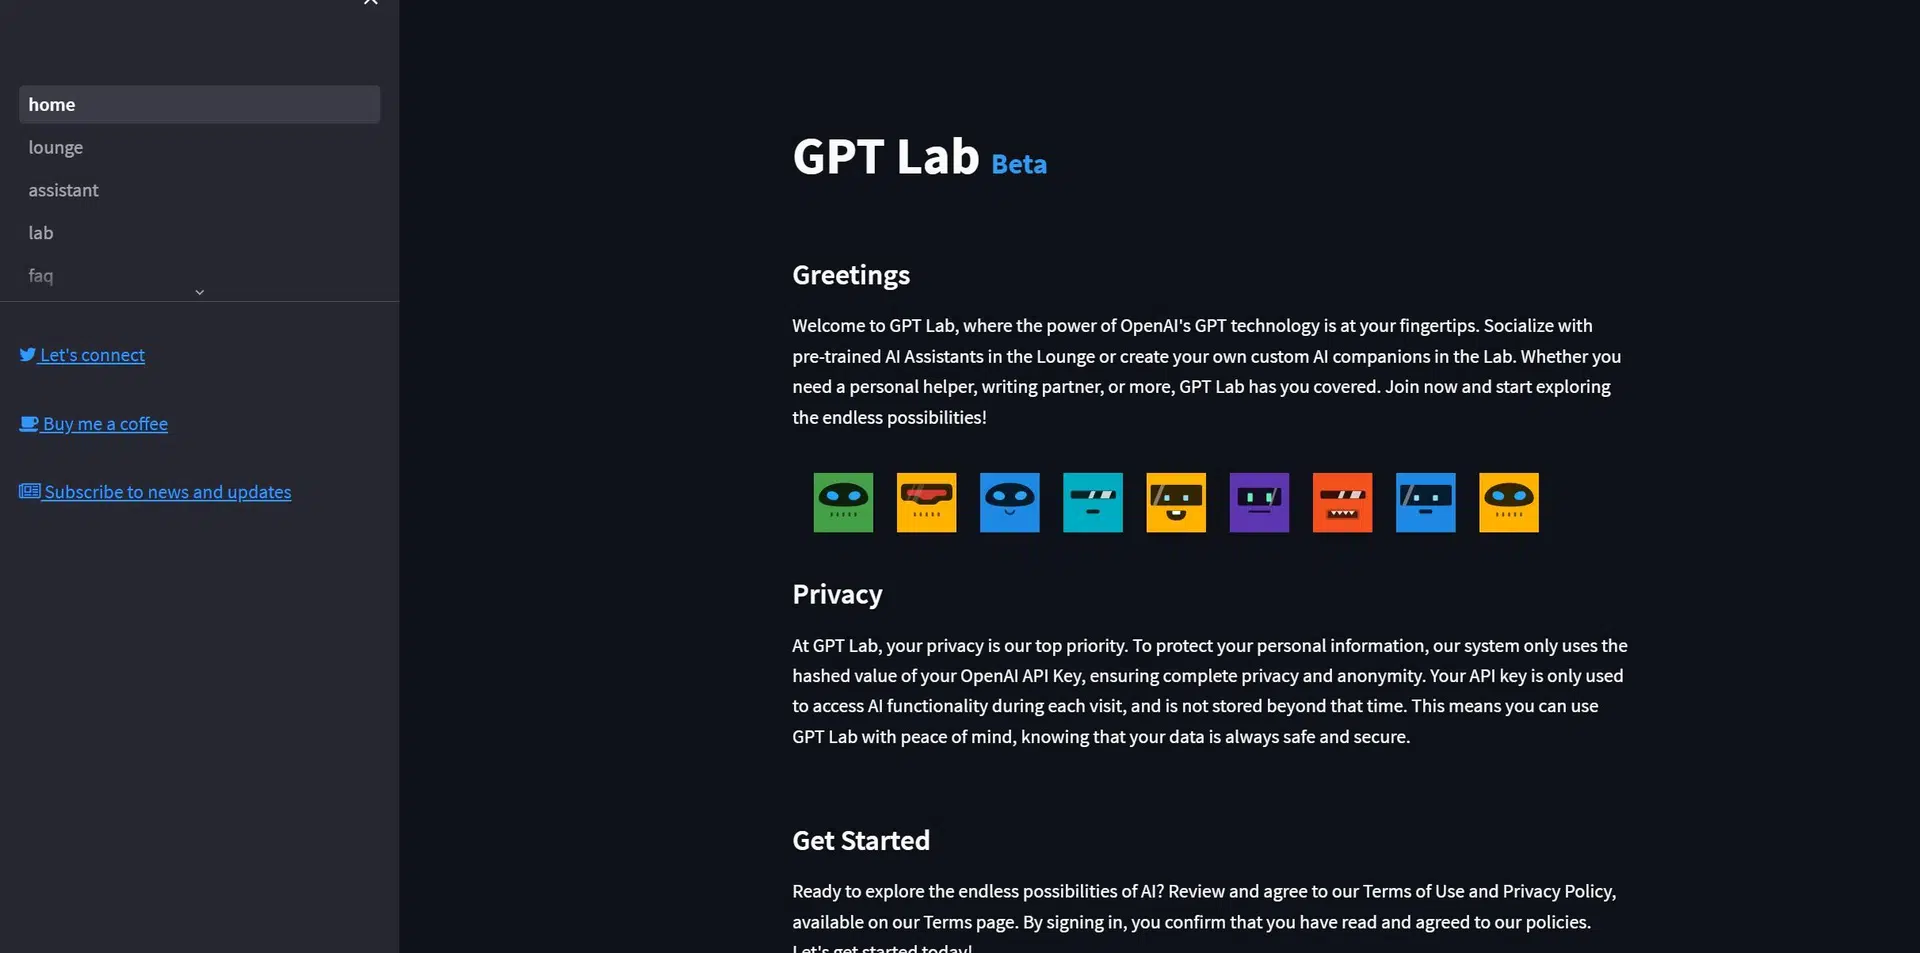 GPT Labwebsite picture